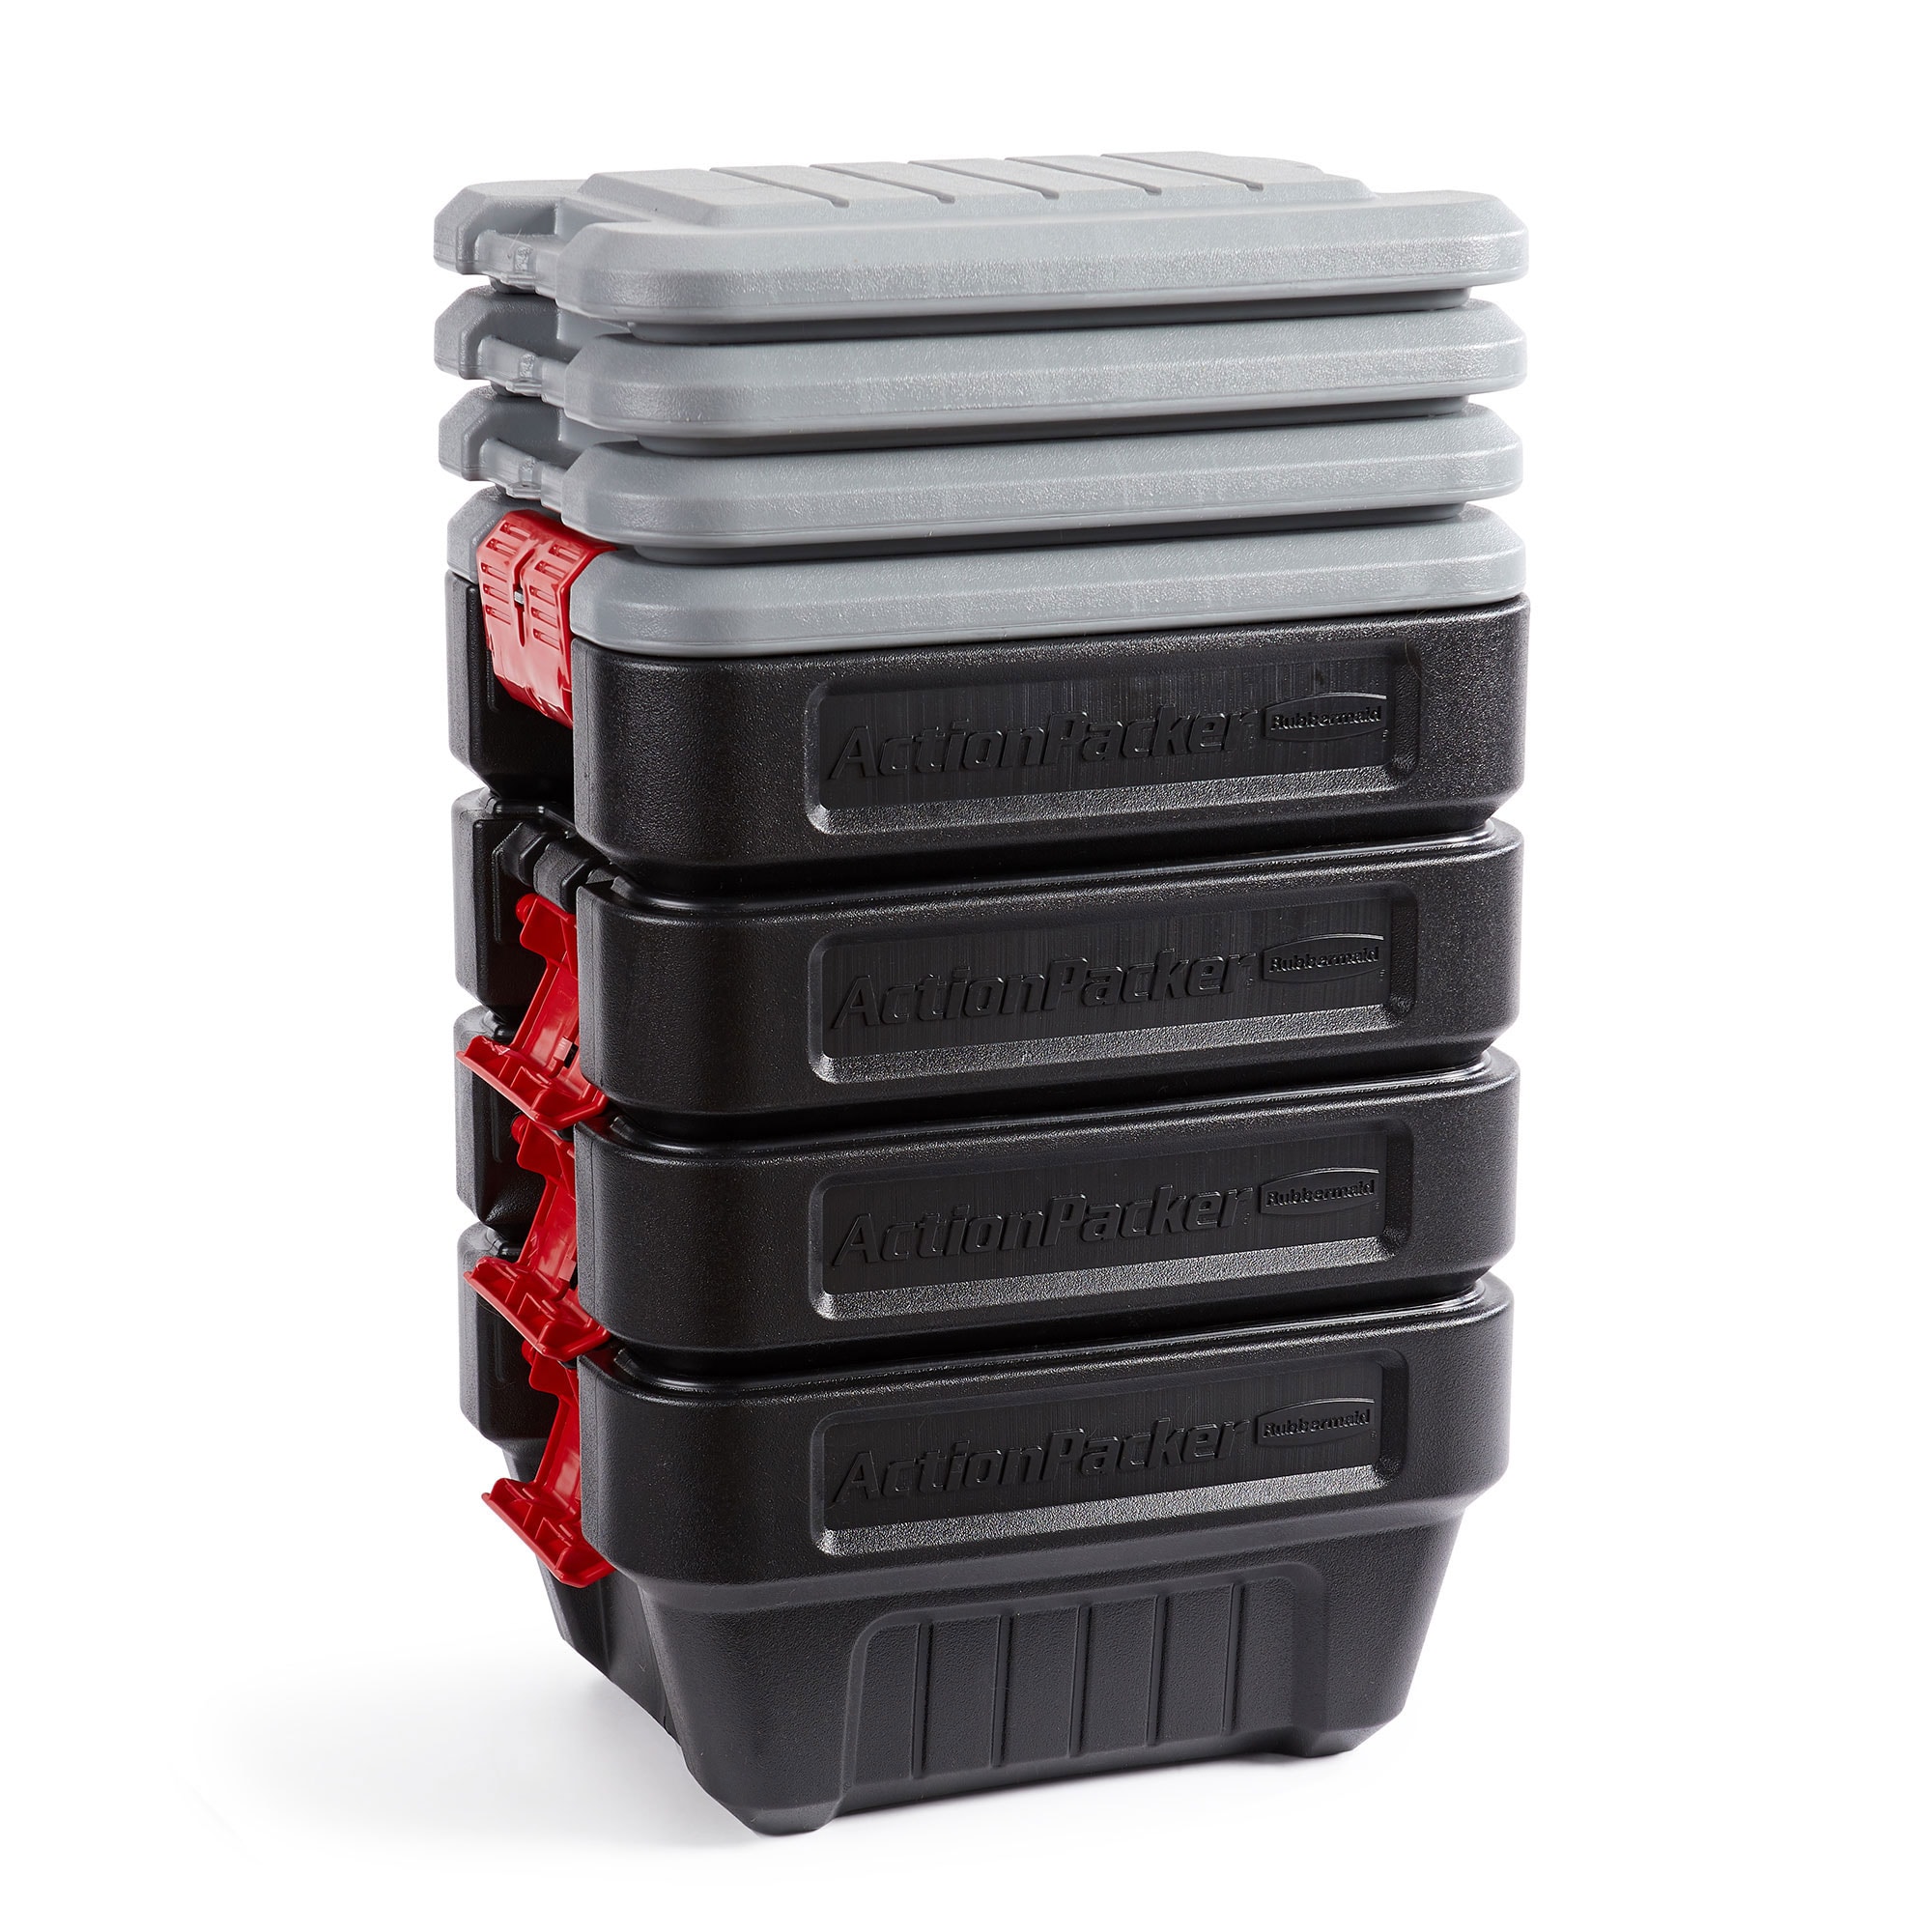 Rubbermaid ActionPacker Lockable Storage Box, 8 Gallon, Grey and Black  (1949040)